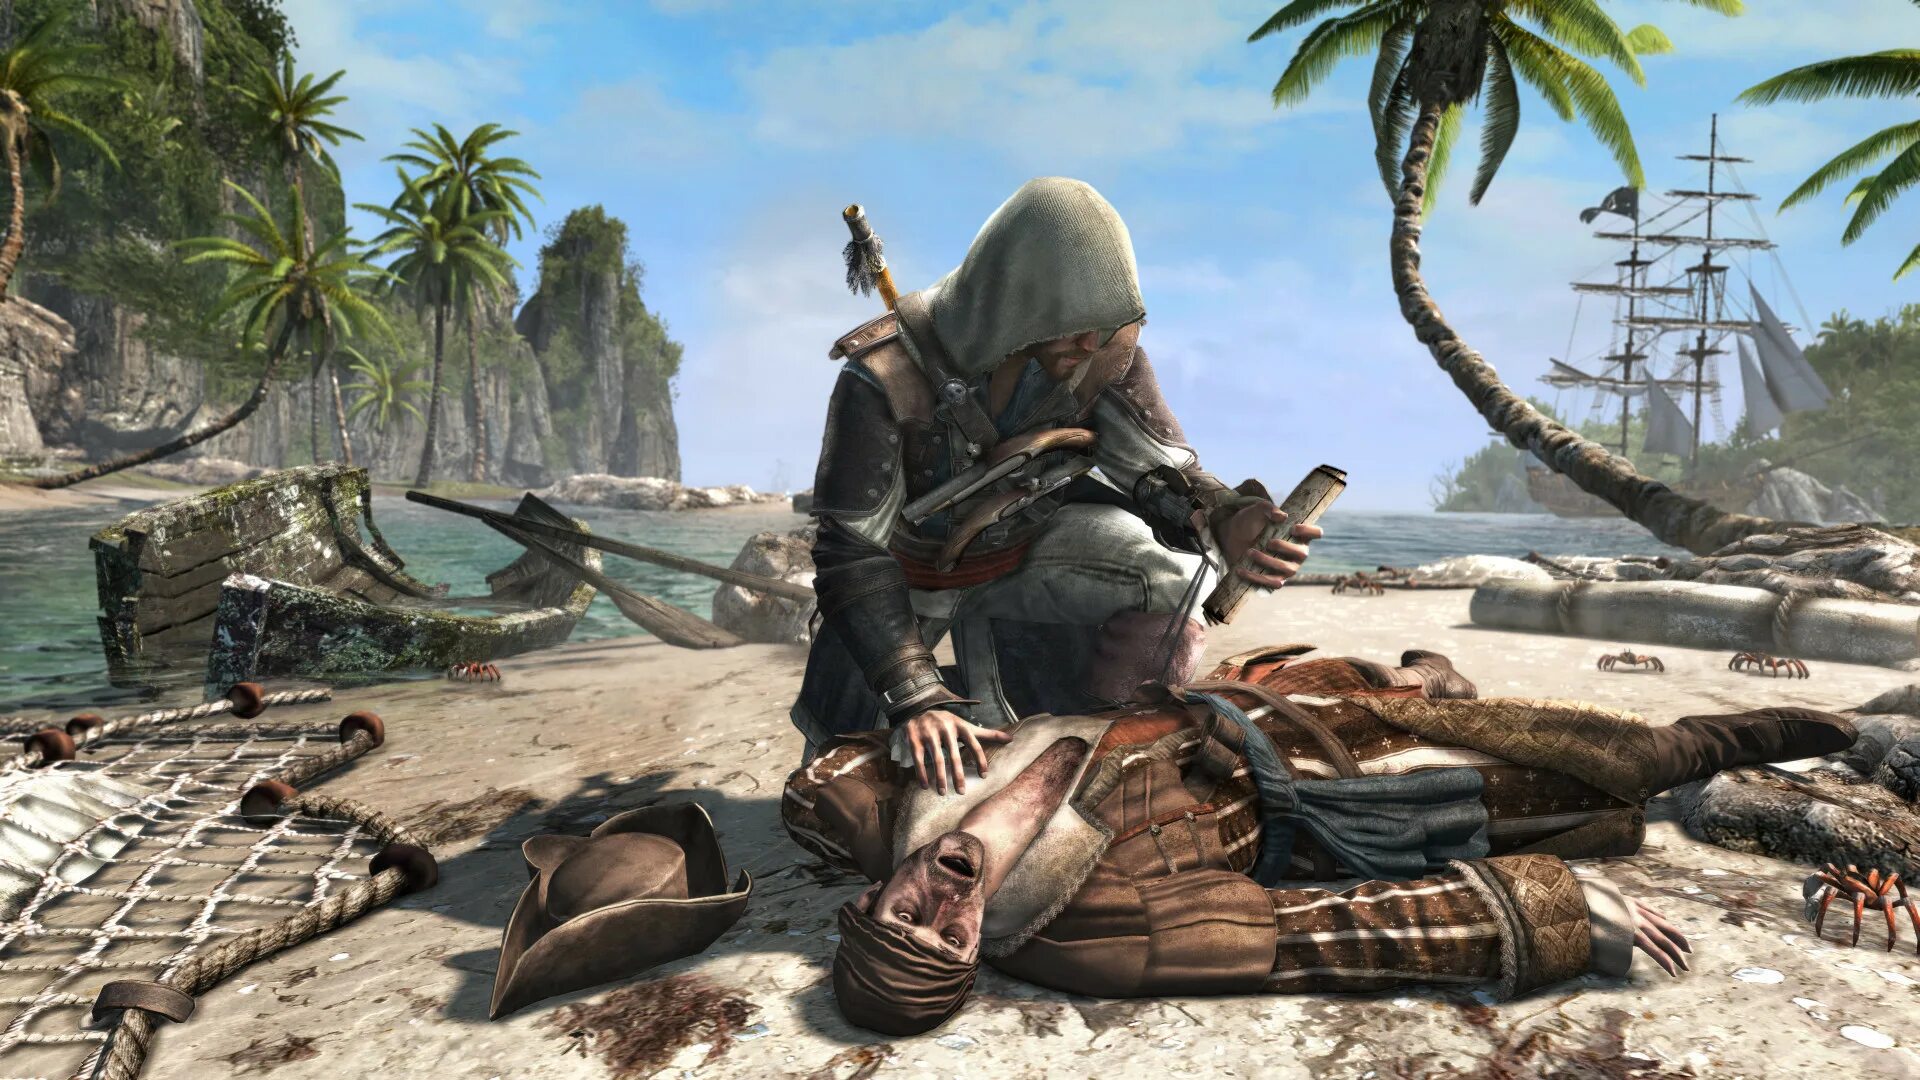 Ассасин Крид 4. Assassin's Creed 4 Black Flag геймплей. Гавана ассасин Крид 4. Ассасин Крид 4 Блэк флаг. Assasın creed 4